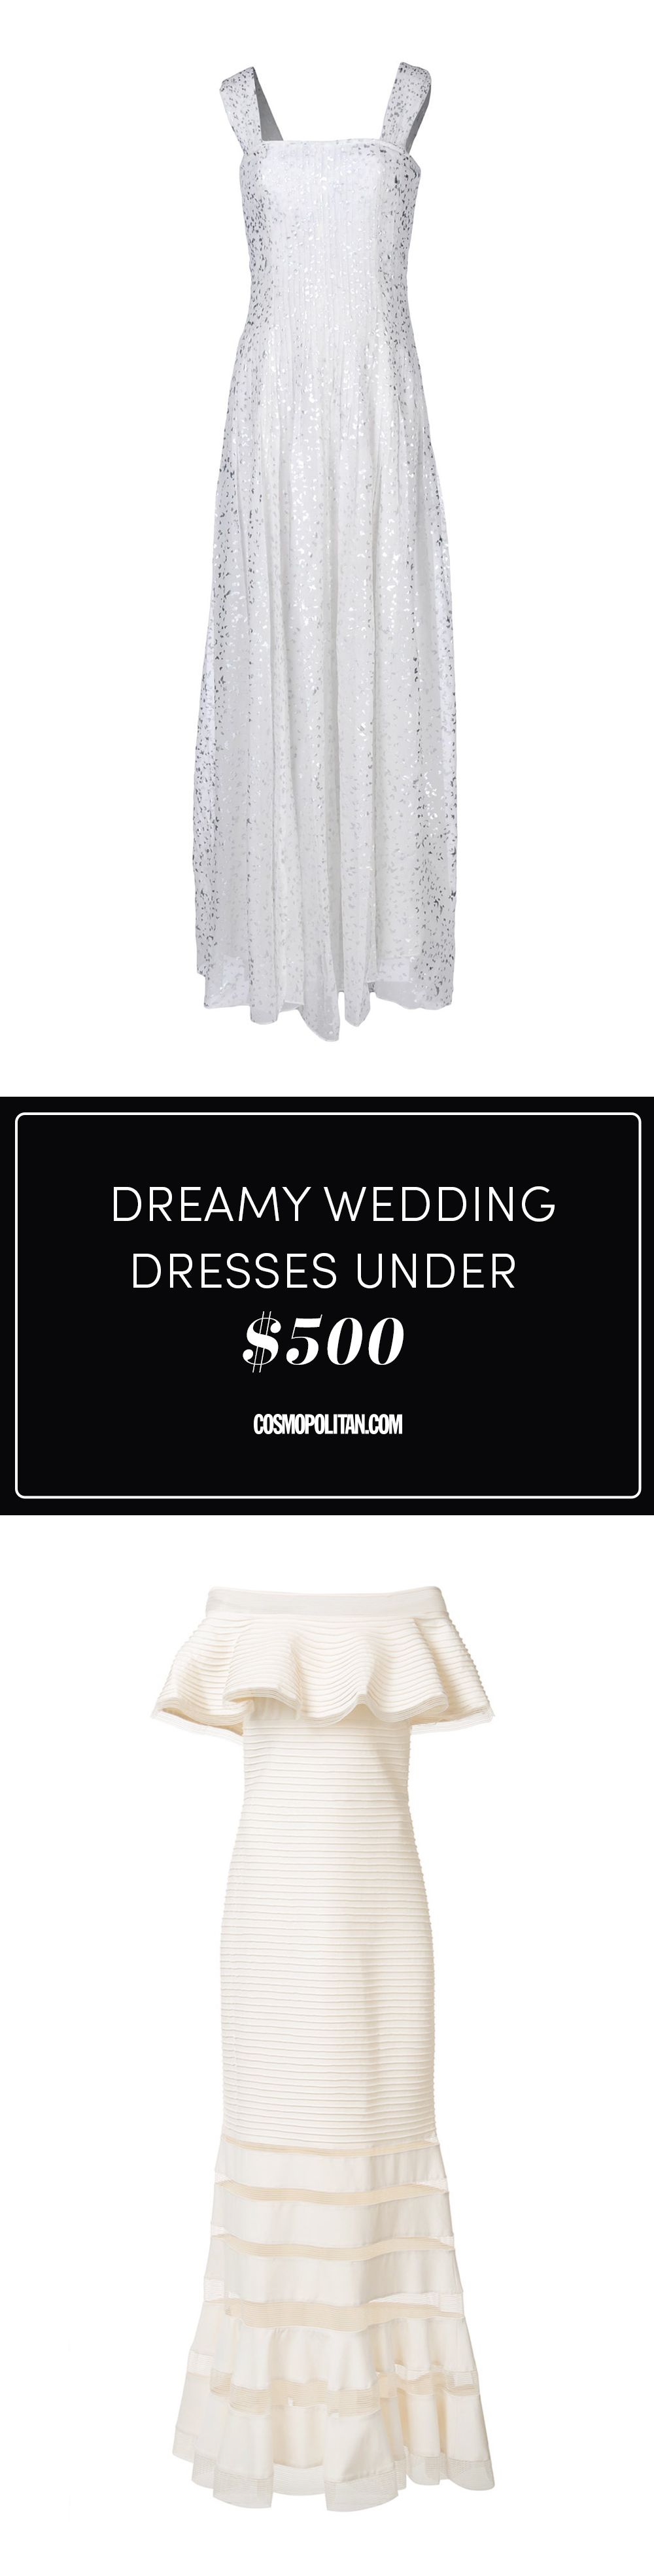 Wedding Dresses - Go Bridal